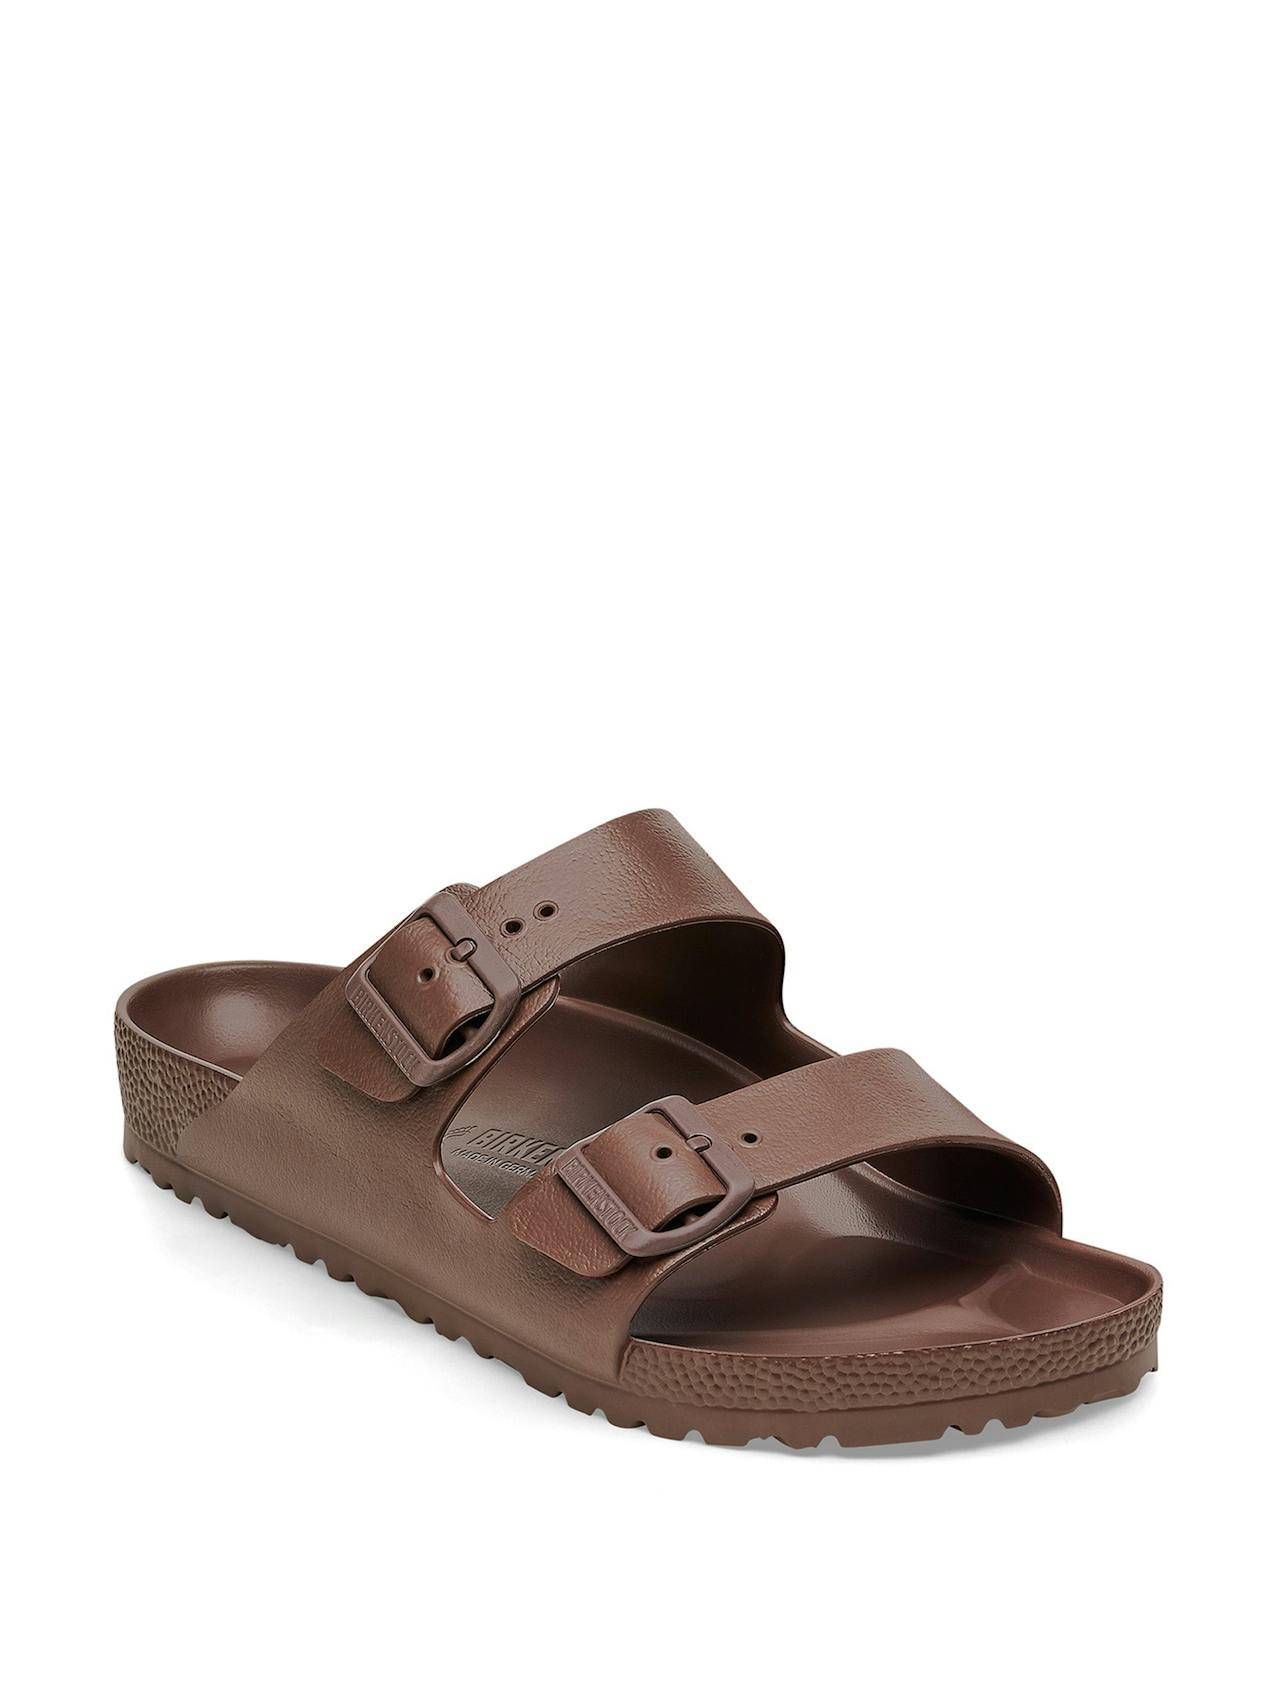 Arizona leather brown sandals